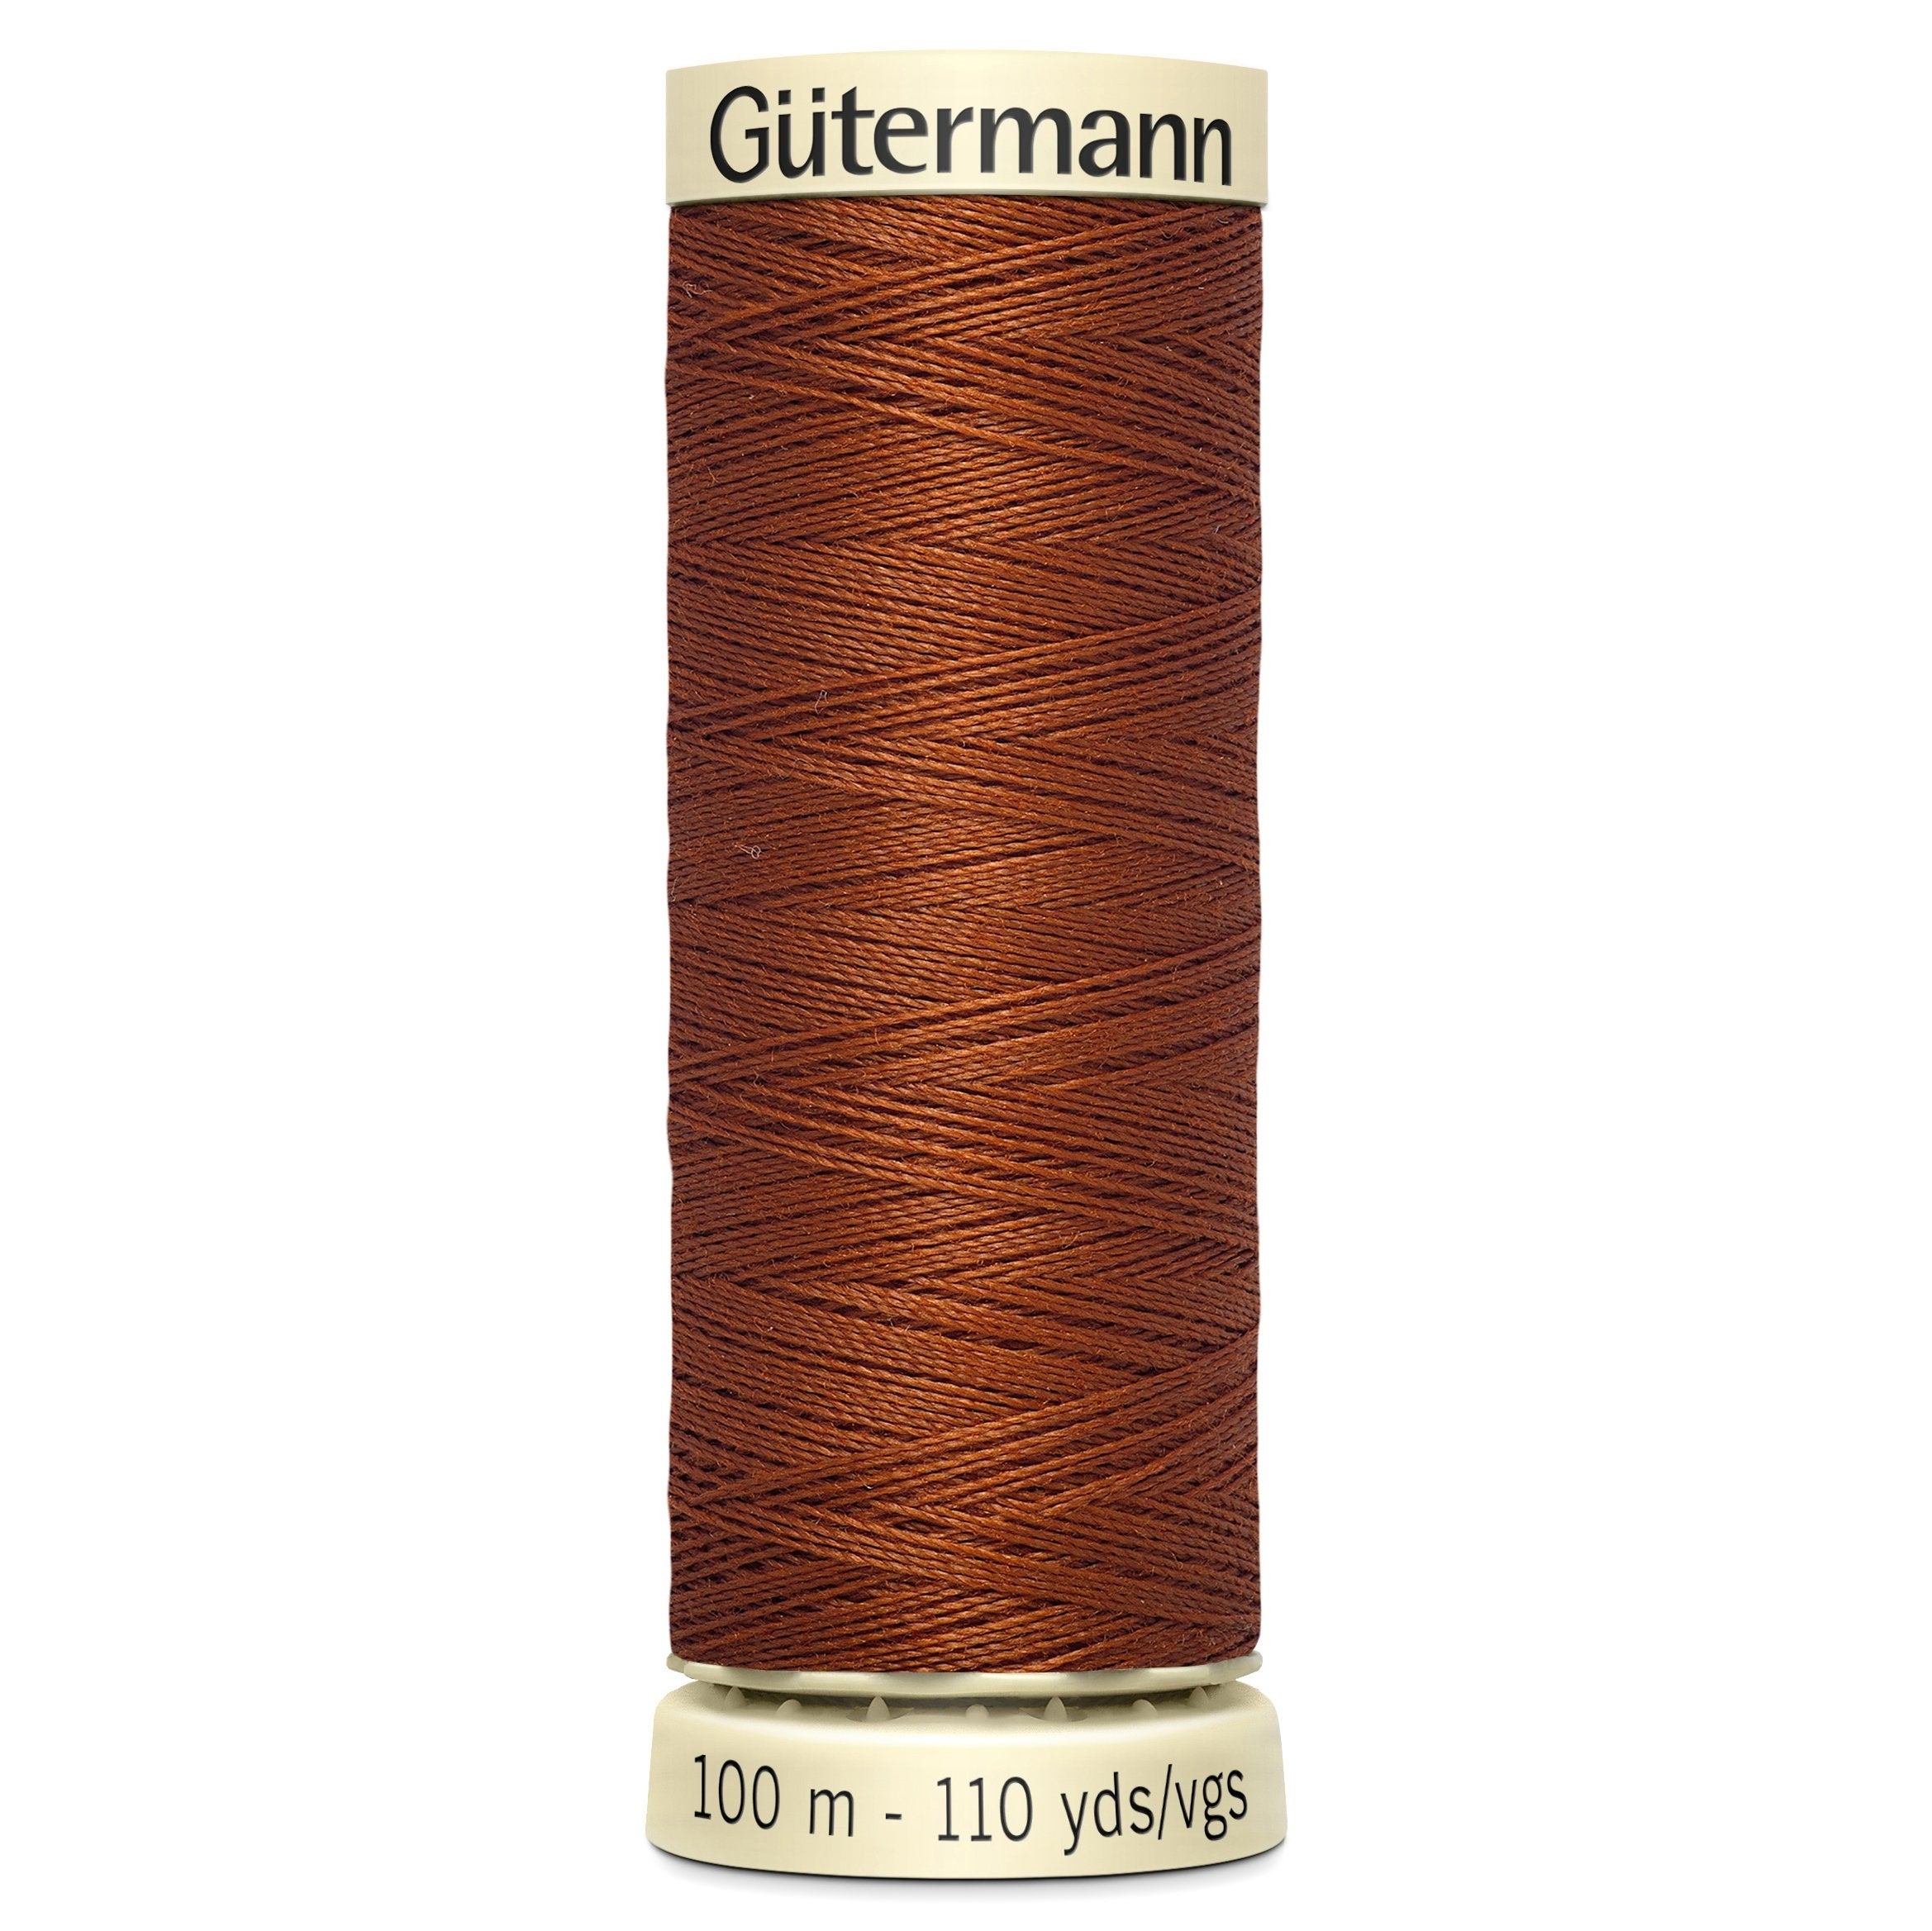 Gutermann Sew All Thread colour 934 Pumpkin from Jaycotts Sewing Supplies